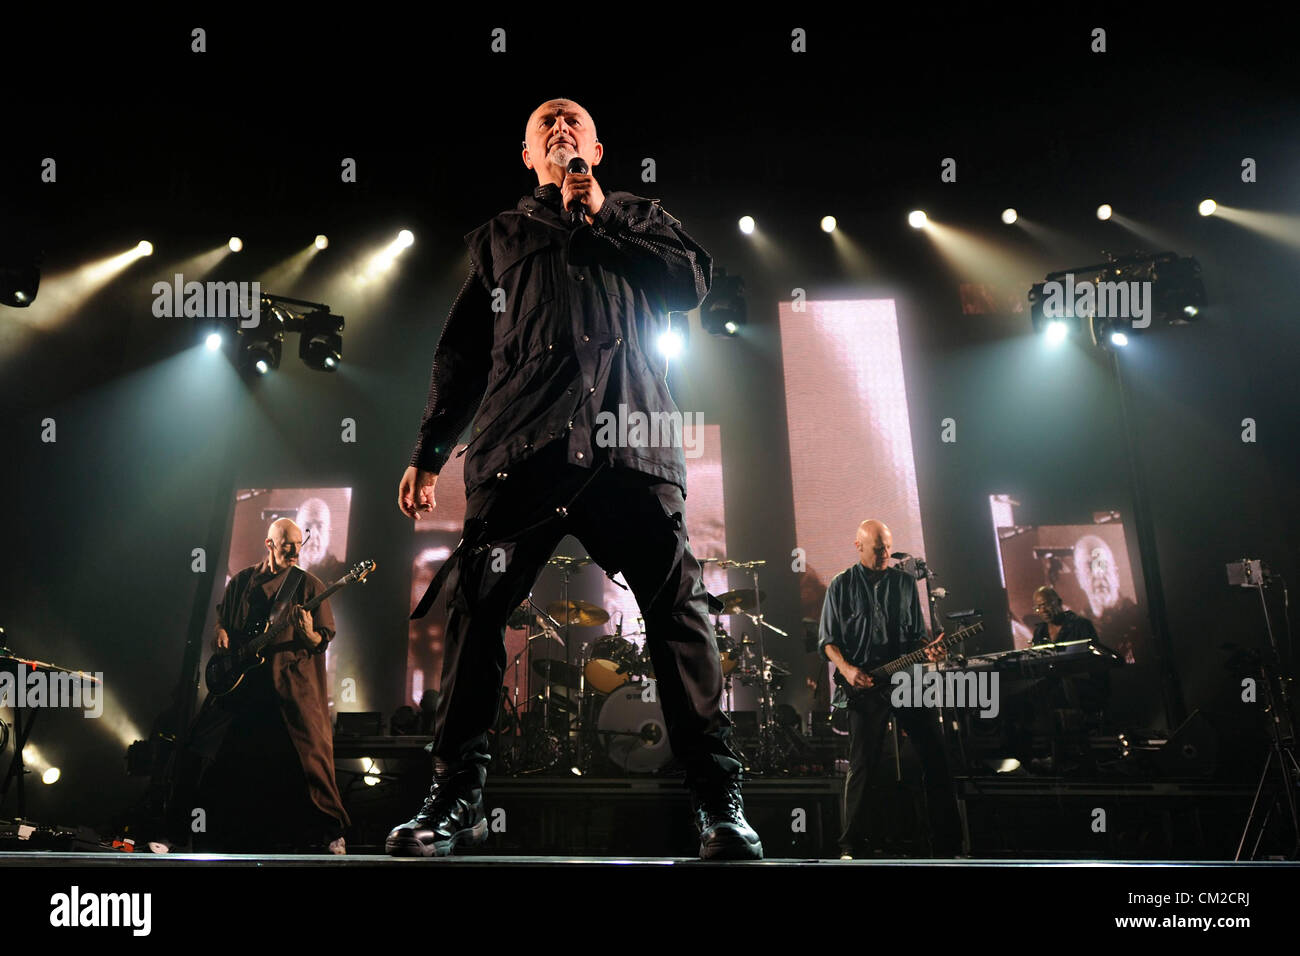 Sept 19, 2012. Toronto, Canada. Peter Gabriel performs at Toronto's Air